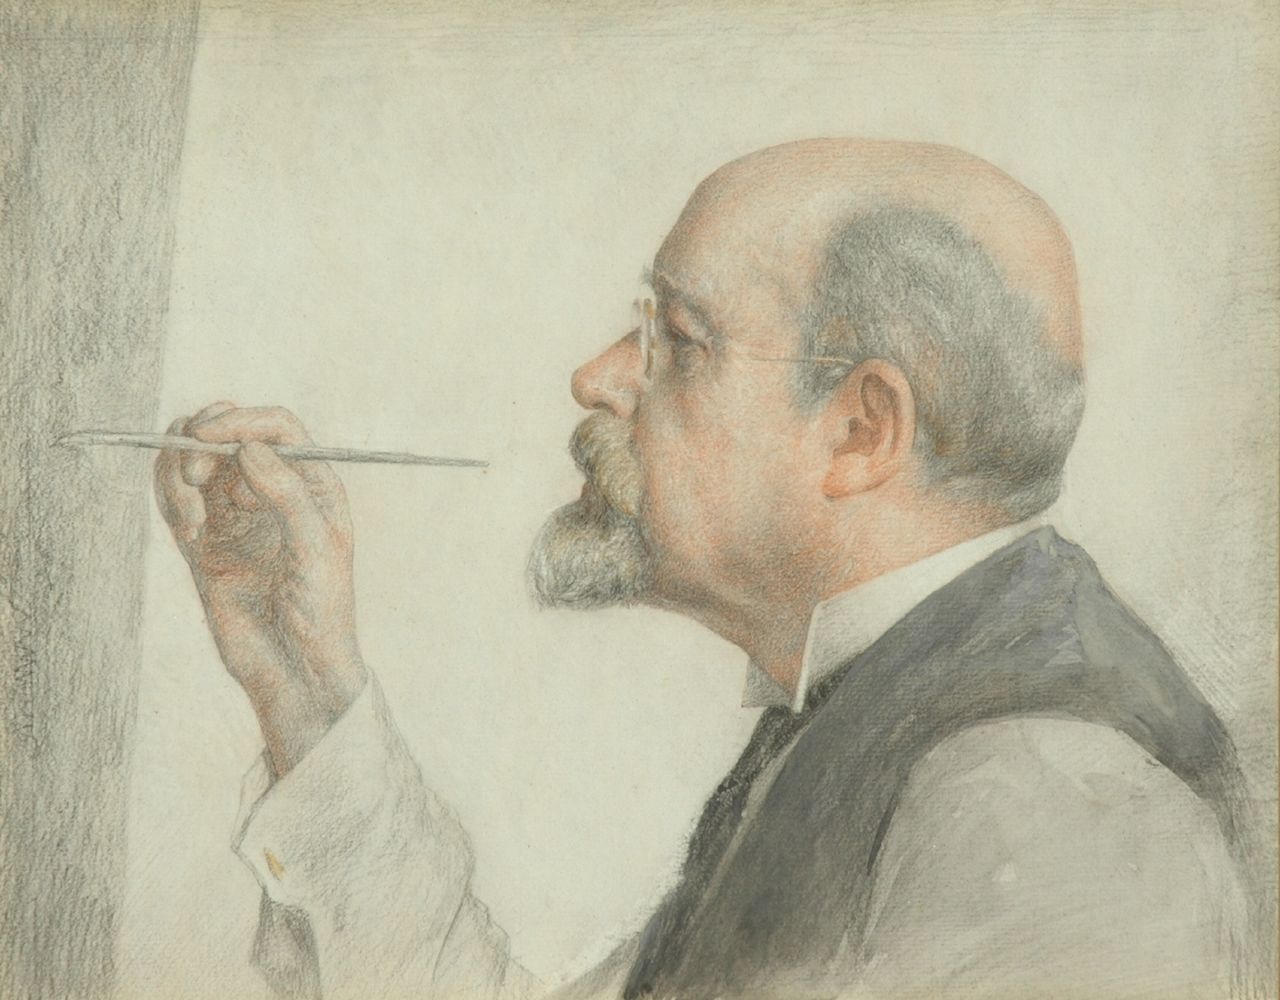 Rueter W.C.G.  | Wilhelm Christian 'Georg' Rueter, Prof. dr. Jan Veth at his easel, coloured pencil on paper 27.1 x 33.6 cm